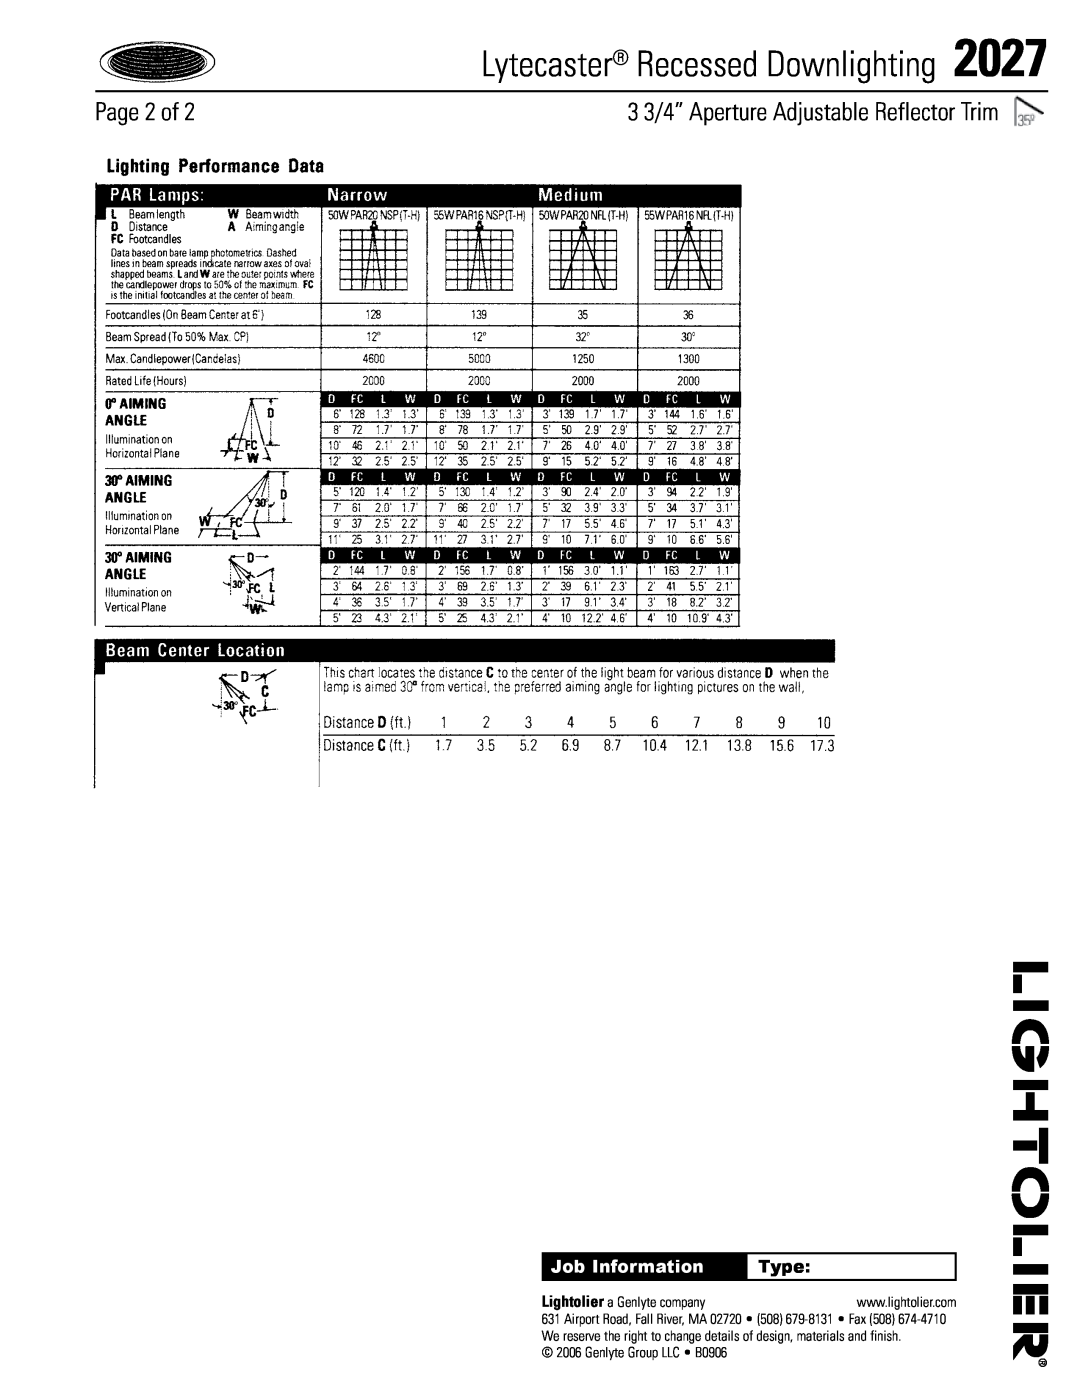 Lightolier 2027WH Lytecaster Recessed Downlighting, Page of, 3 3/4” Aperture Adjustable Reflector Trim, Job Information 